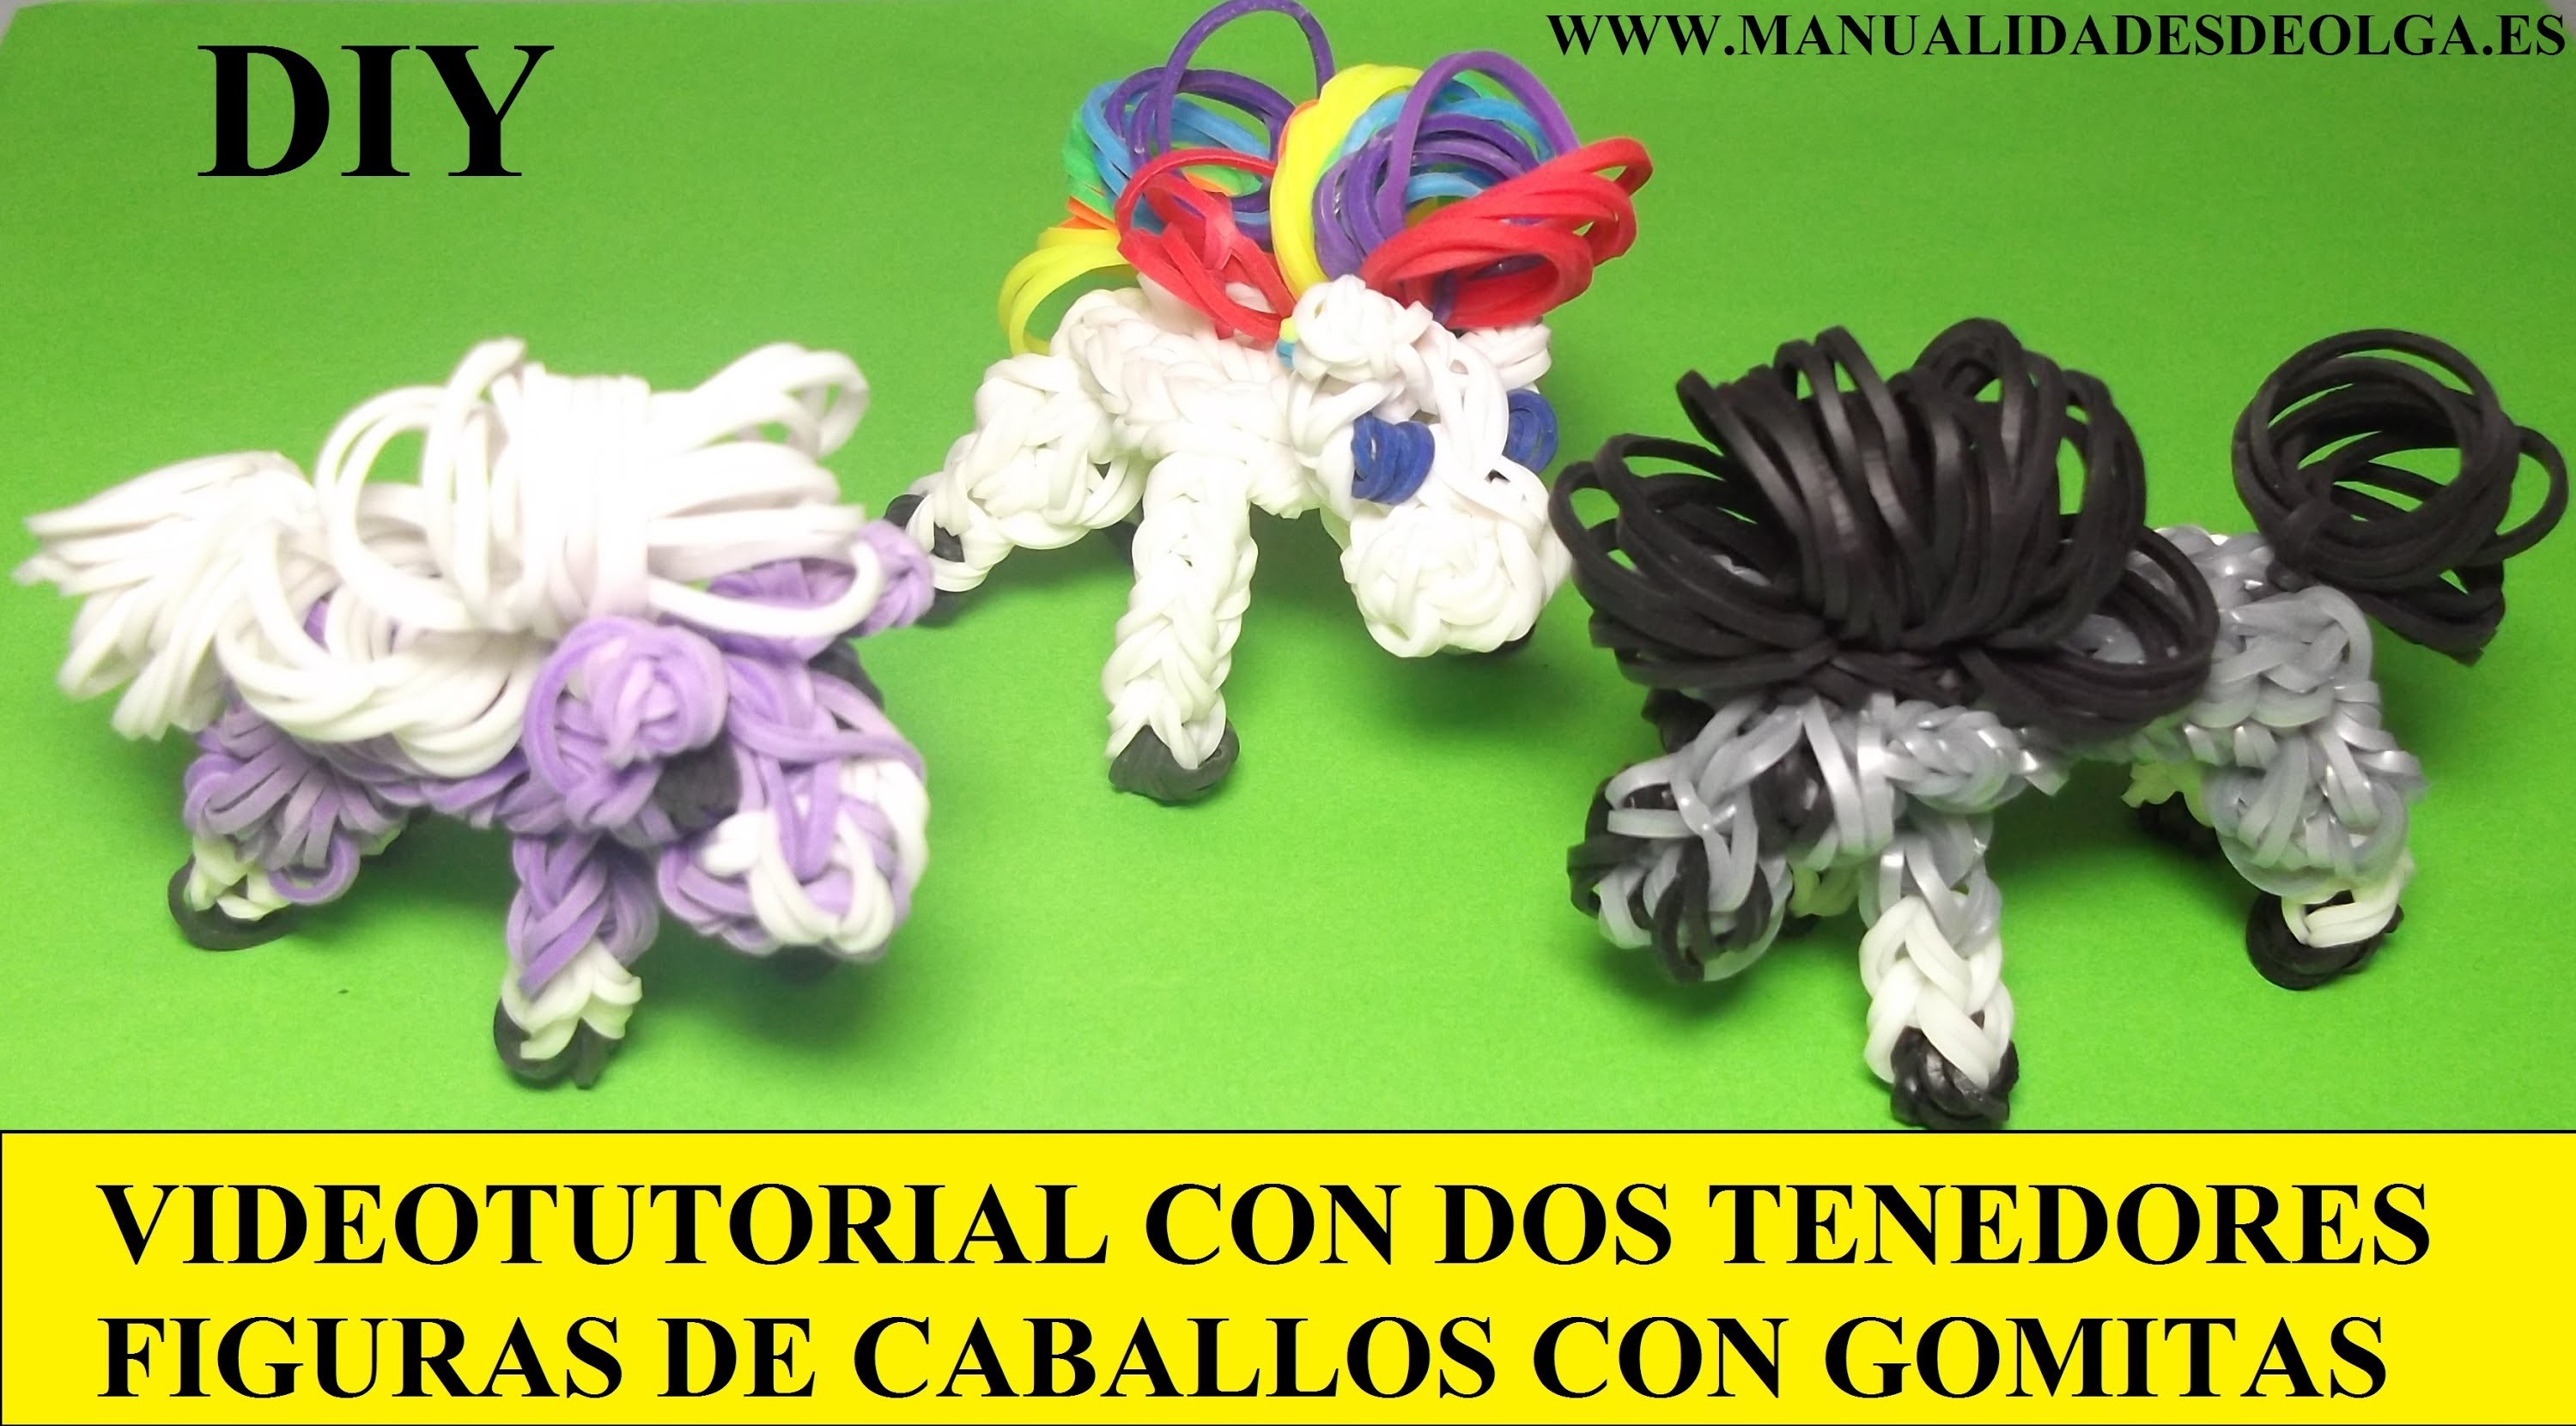 COMO HACER UN CABALLO DE GOMITAS (LIGAS) (HORSE CHARMS) CON DOS TENEDORES. TUTORIAL DIY